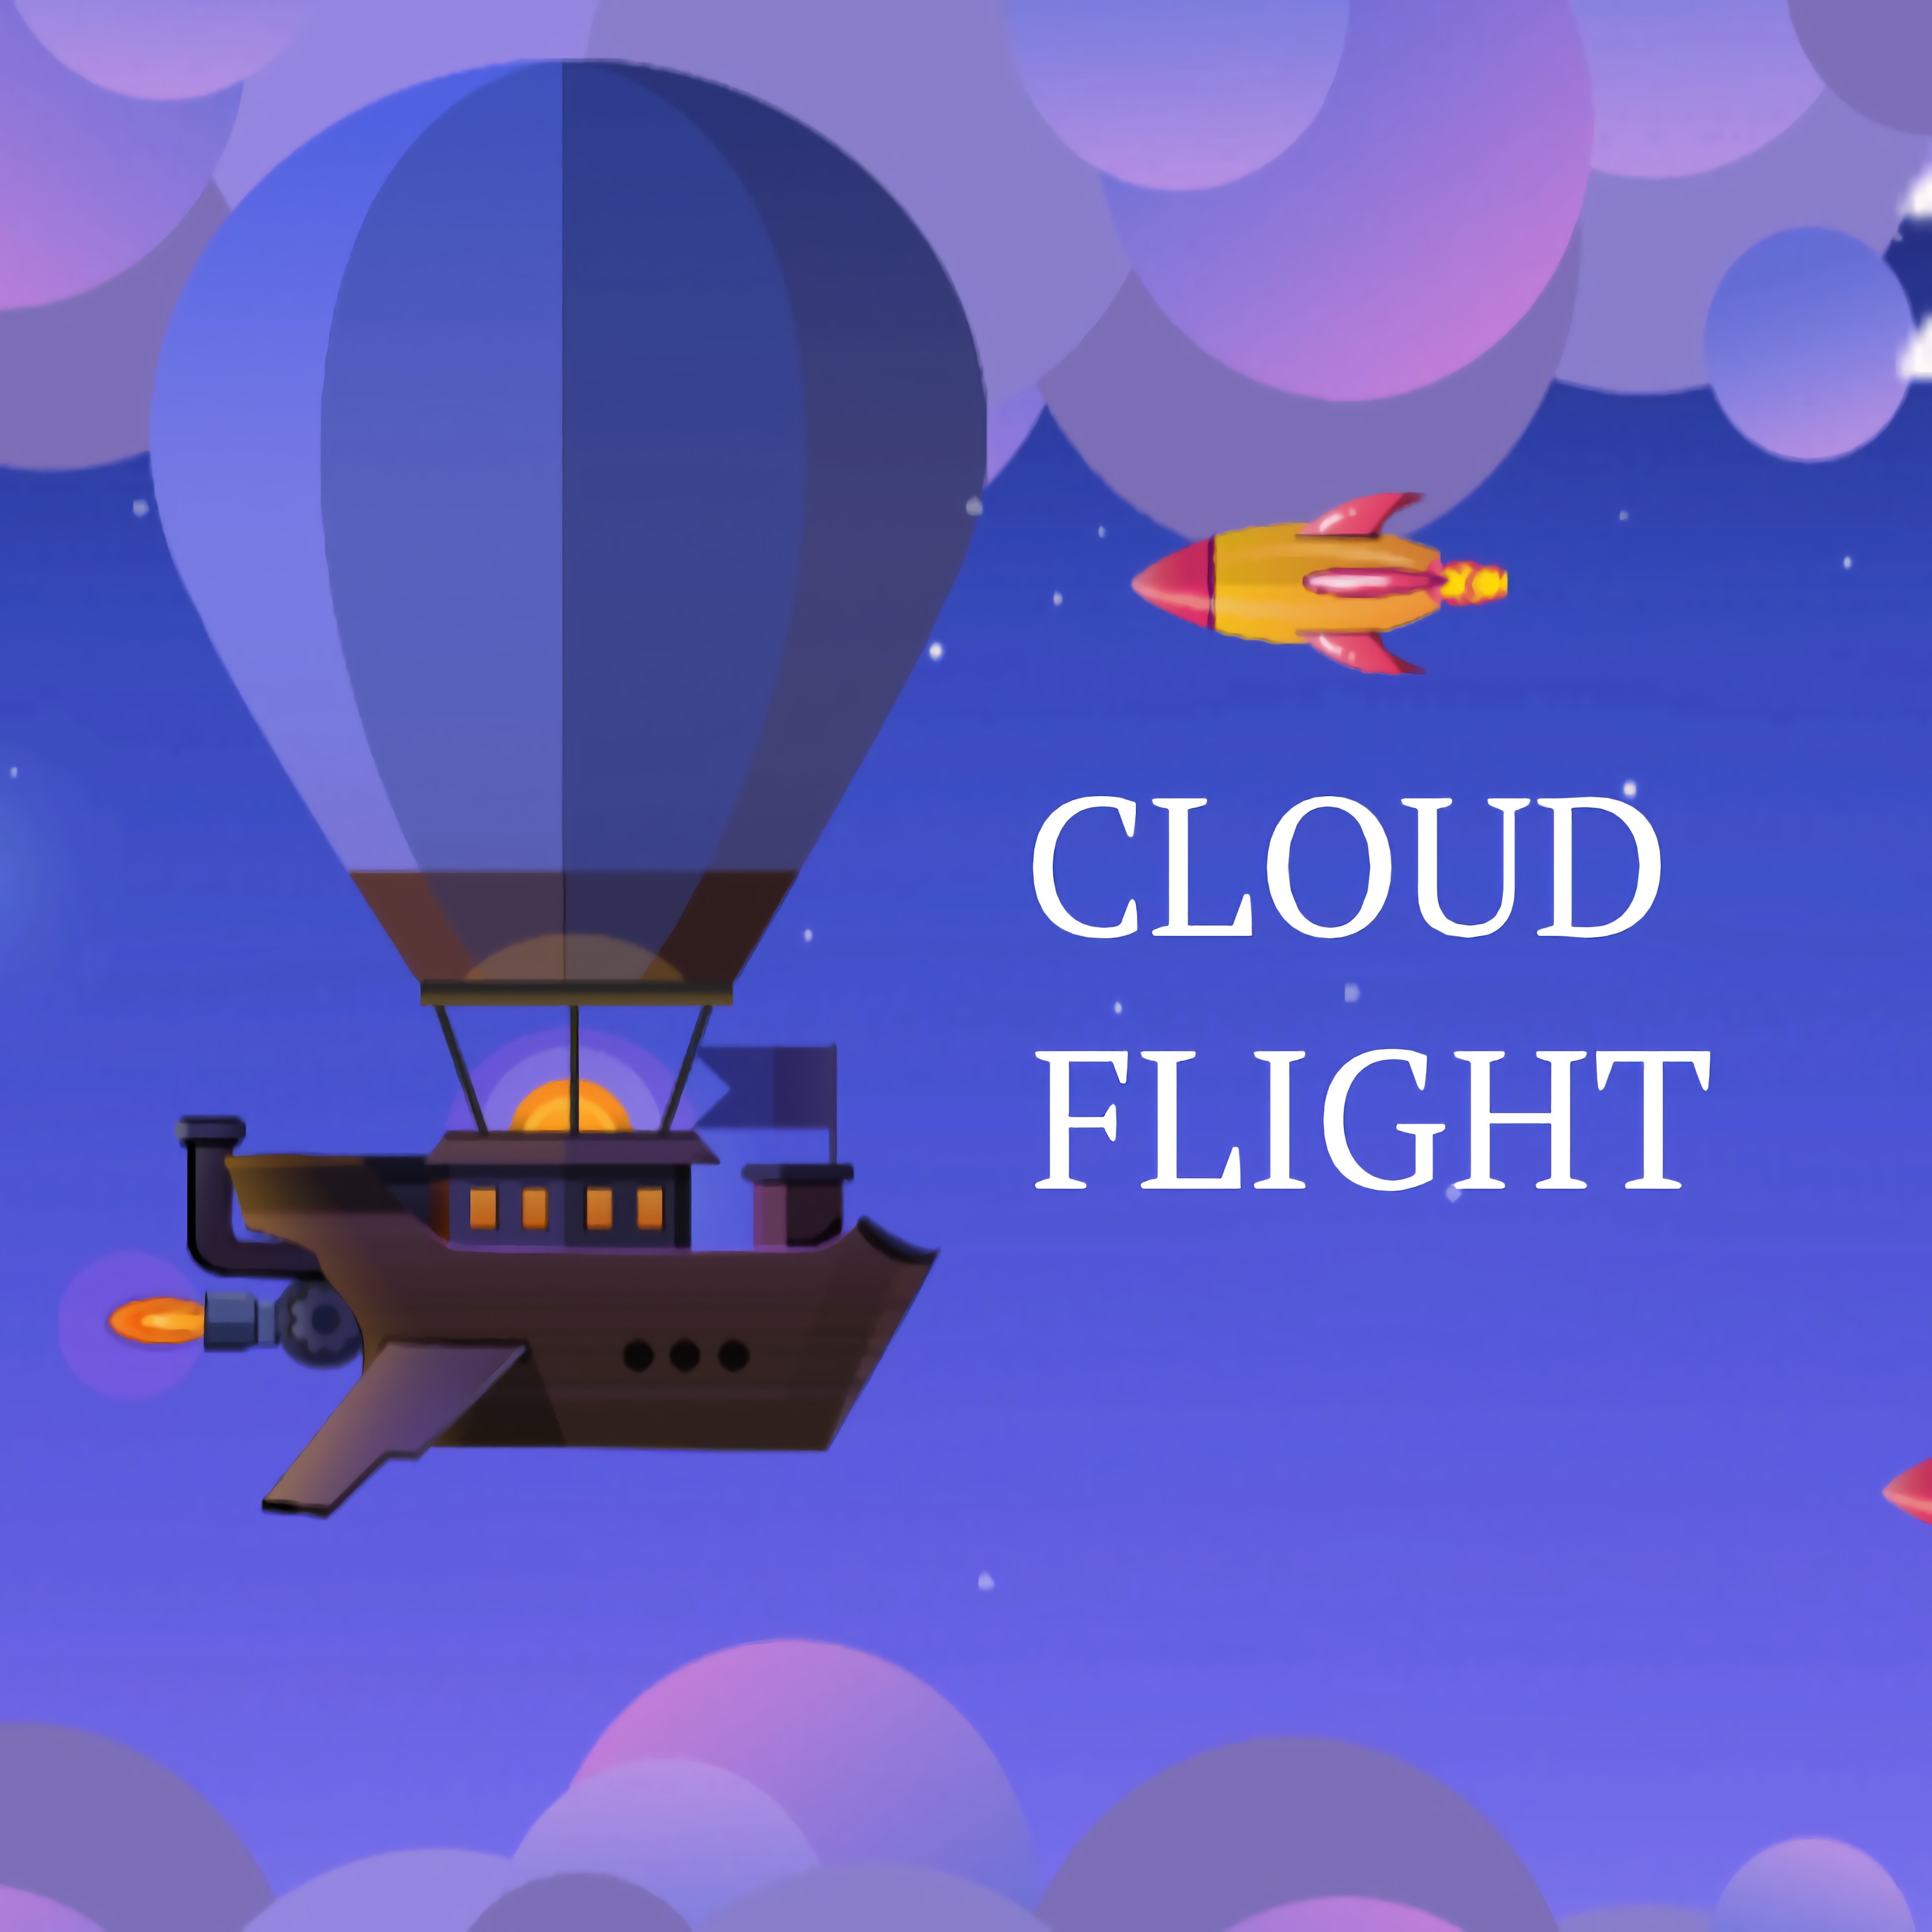 Cloud Flight